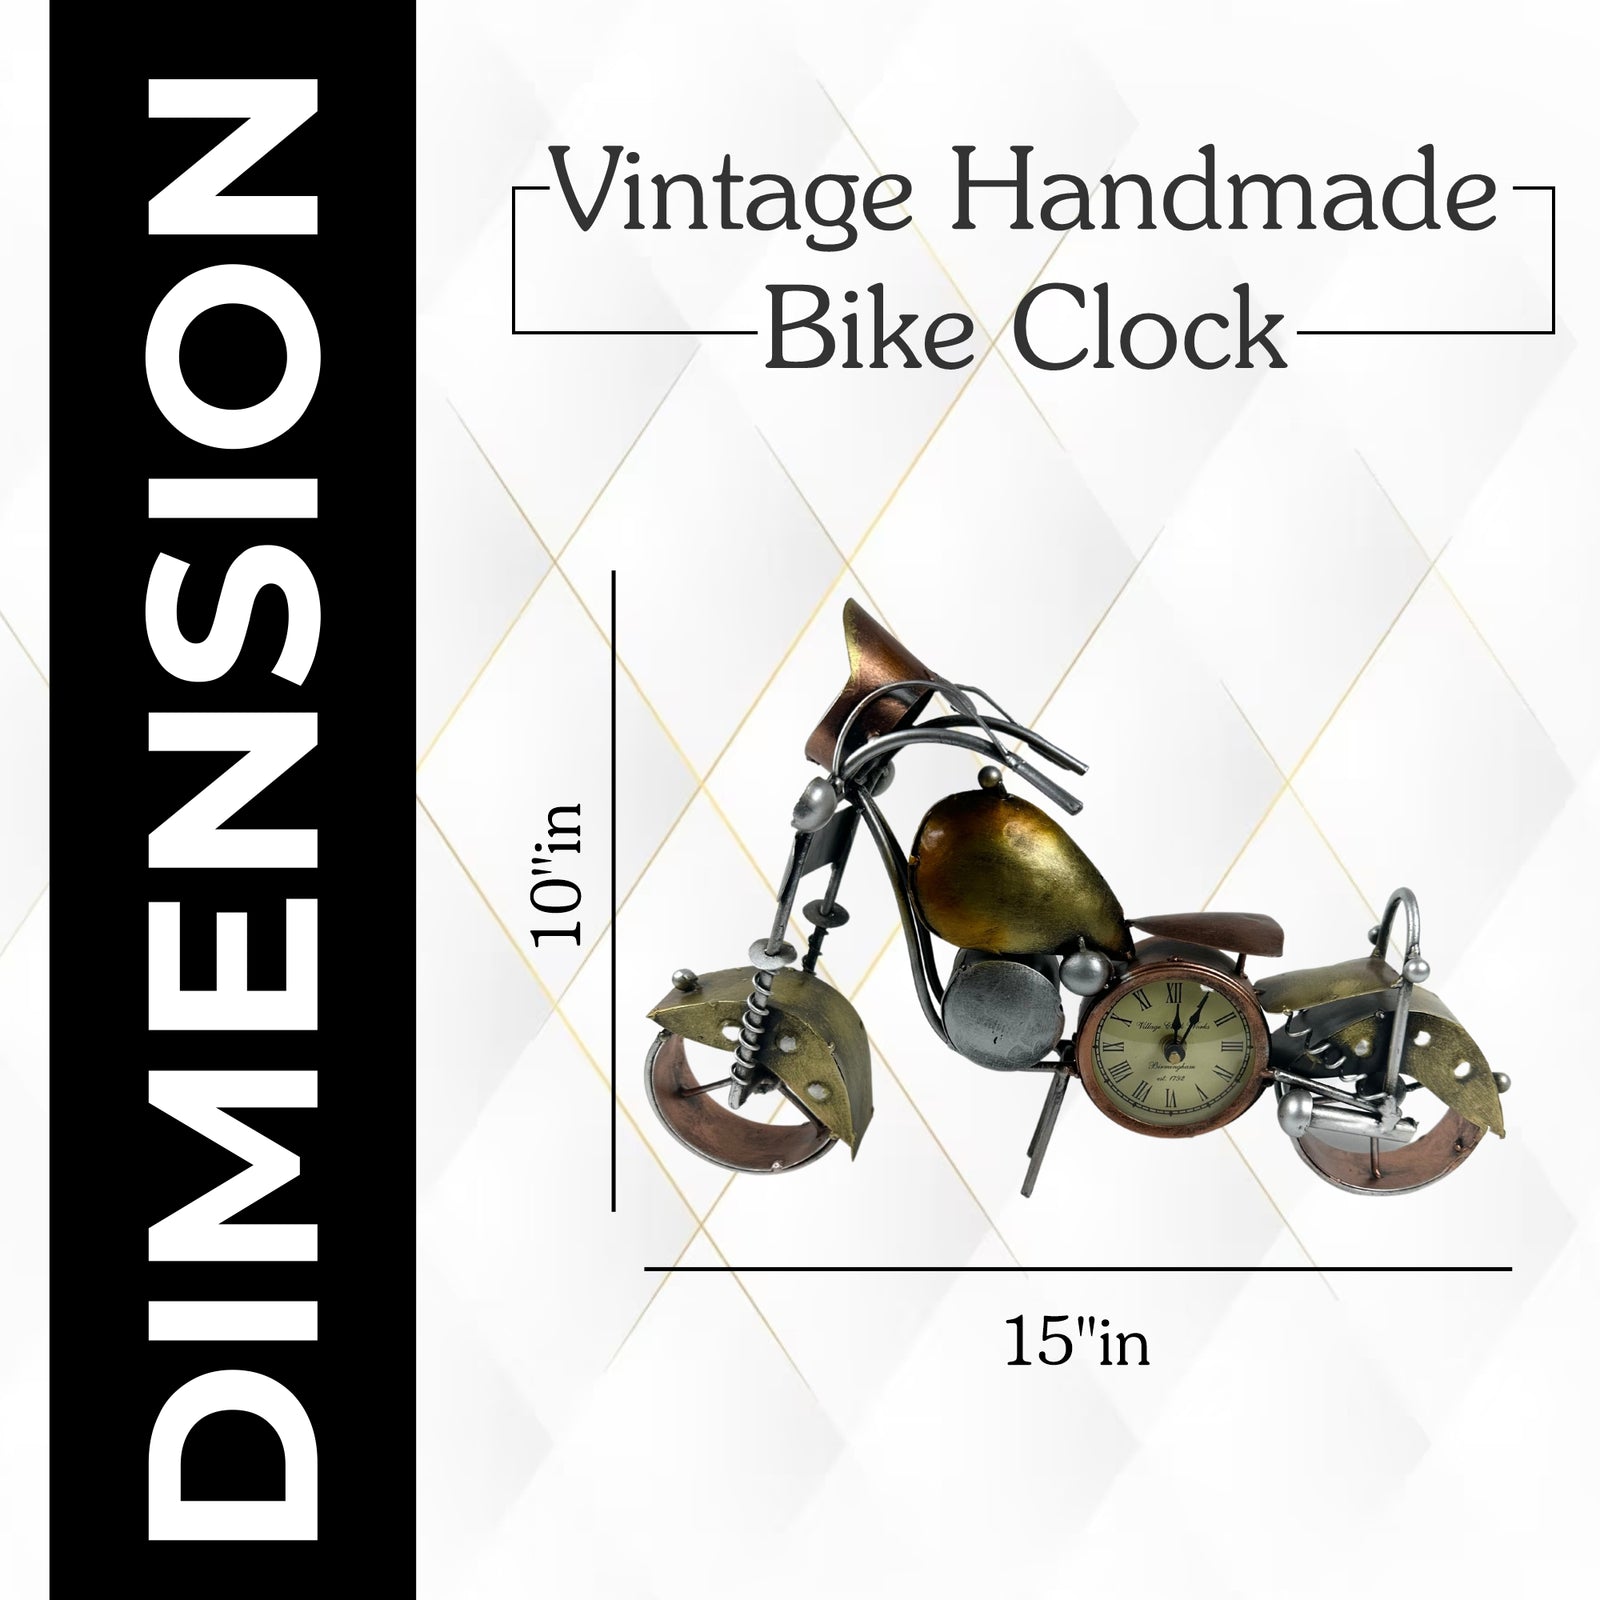 Vintage Handmade Bike Clock